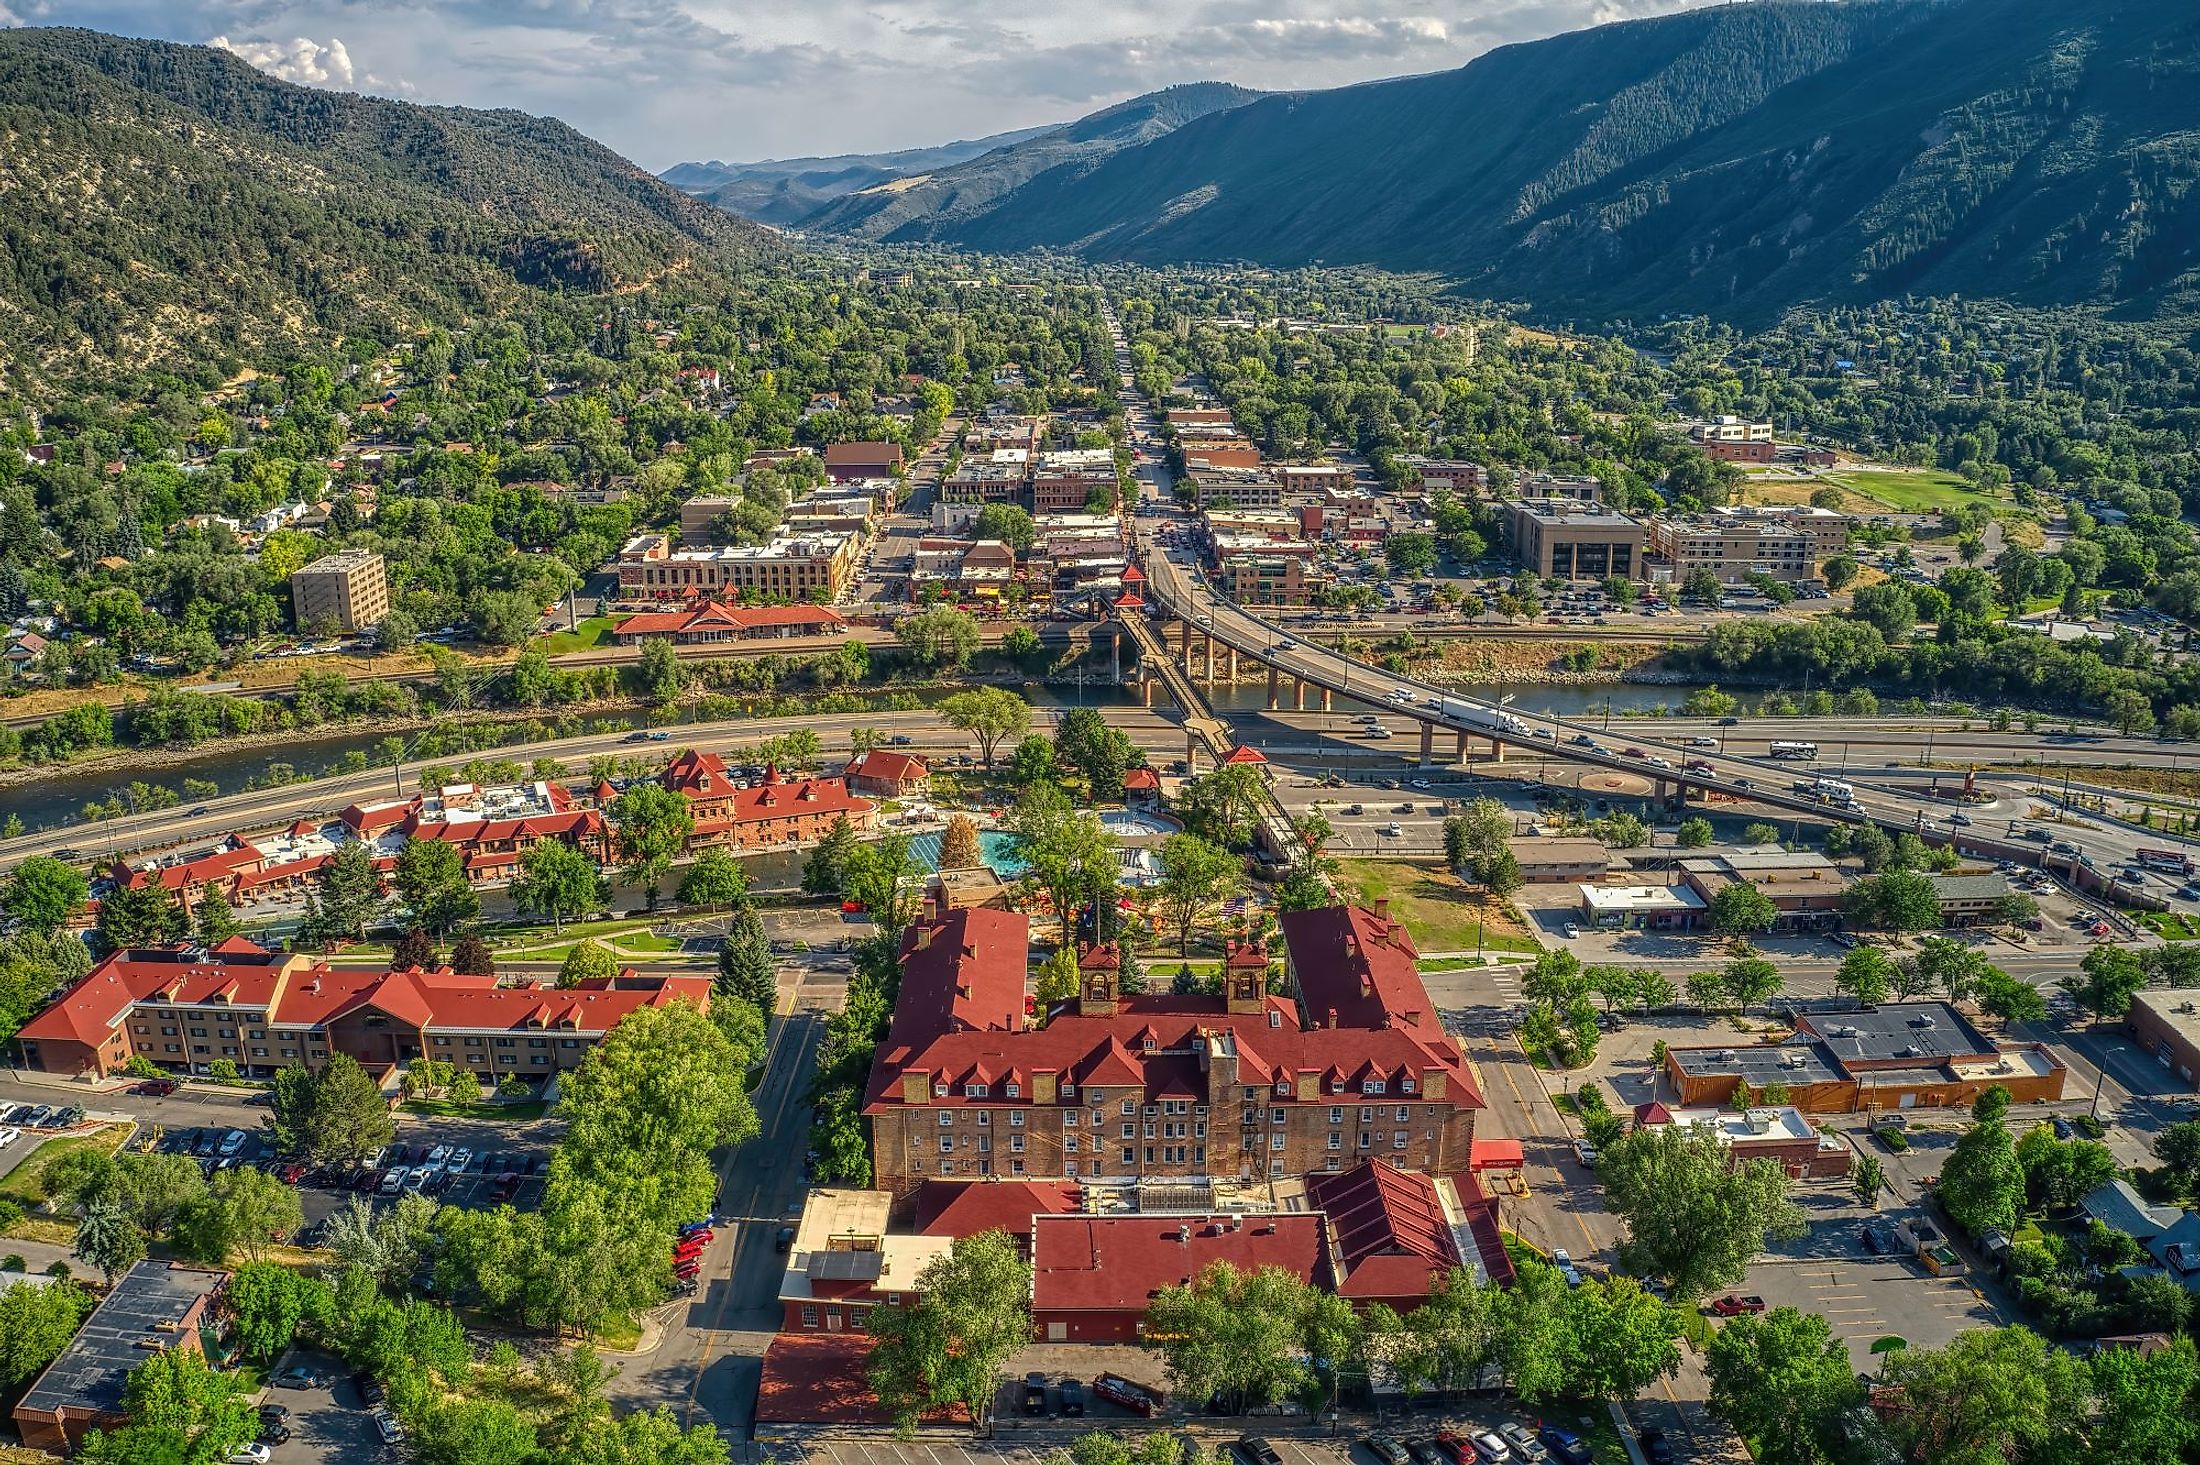 Aerial view of downtown Glenwood Springs, Colorado